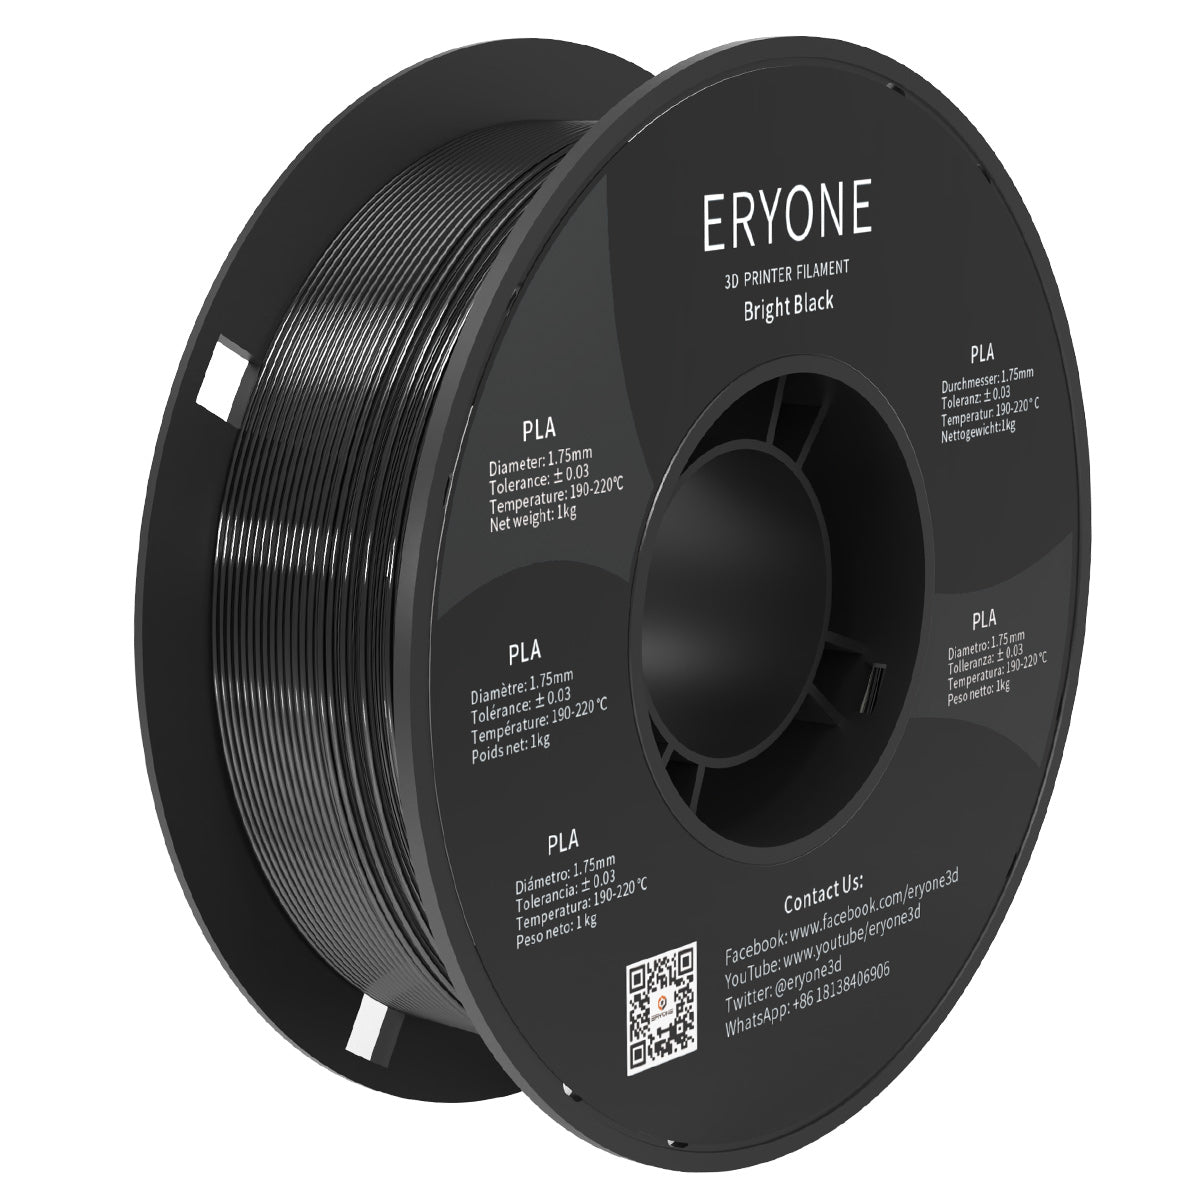 Eryone - PLA Standard - Noir Brillant (Bright Black) - 1.75mm - 1 Kg